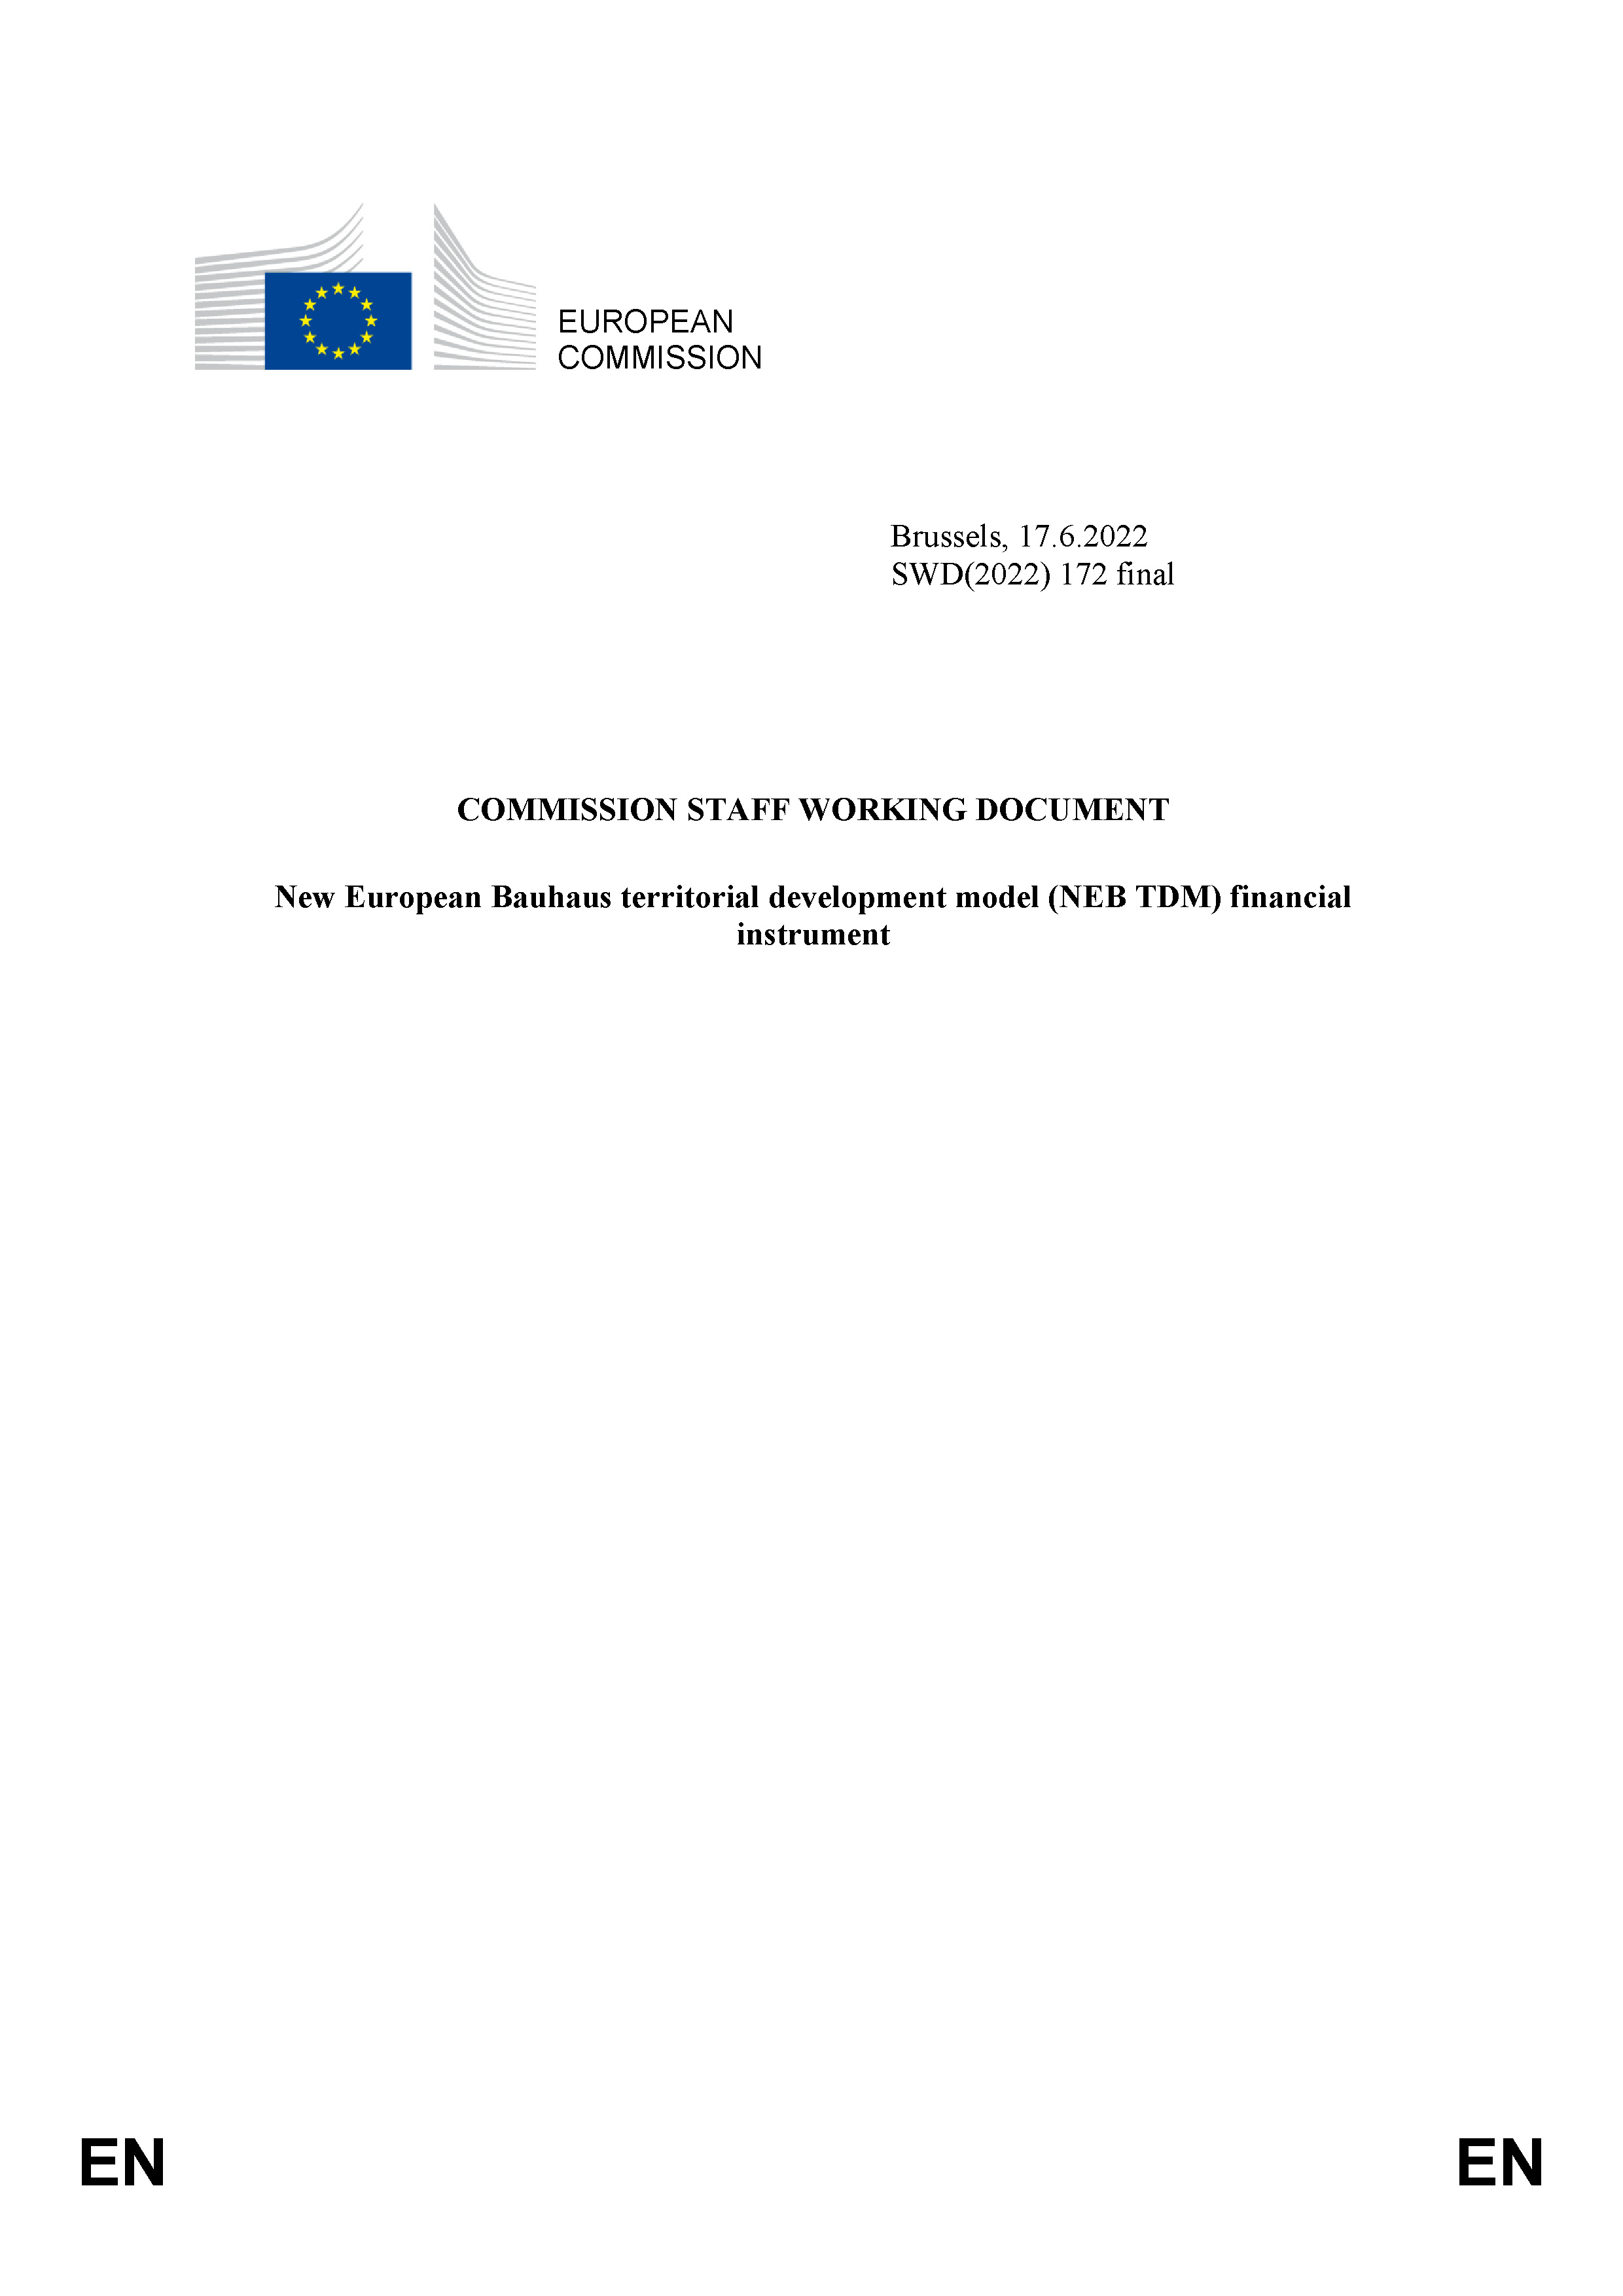 New European Bauhaus territorial development model (NEB TDM) financial instrument